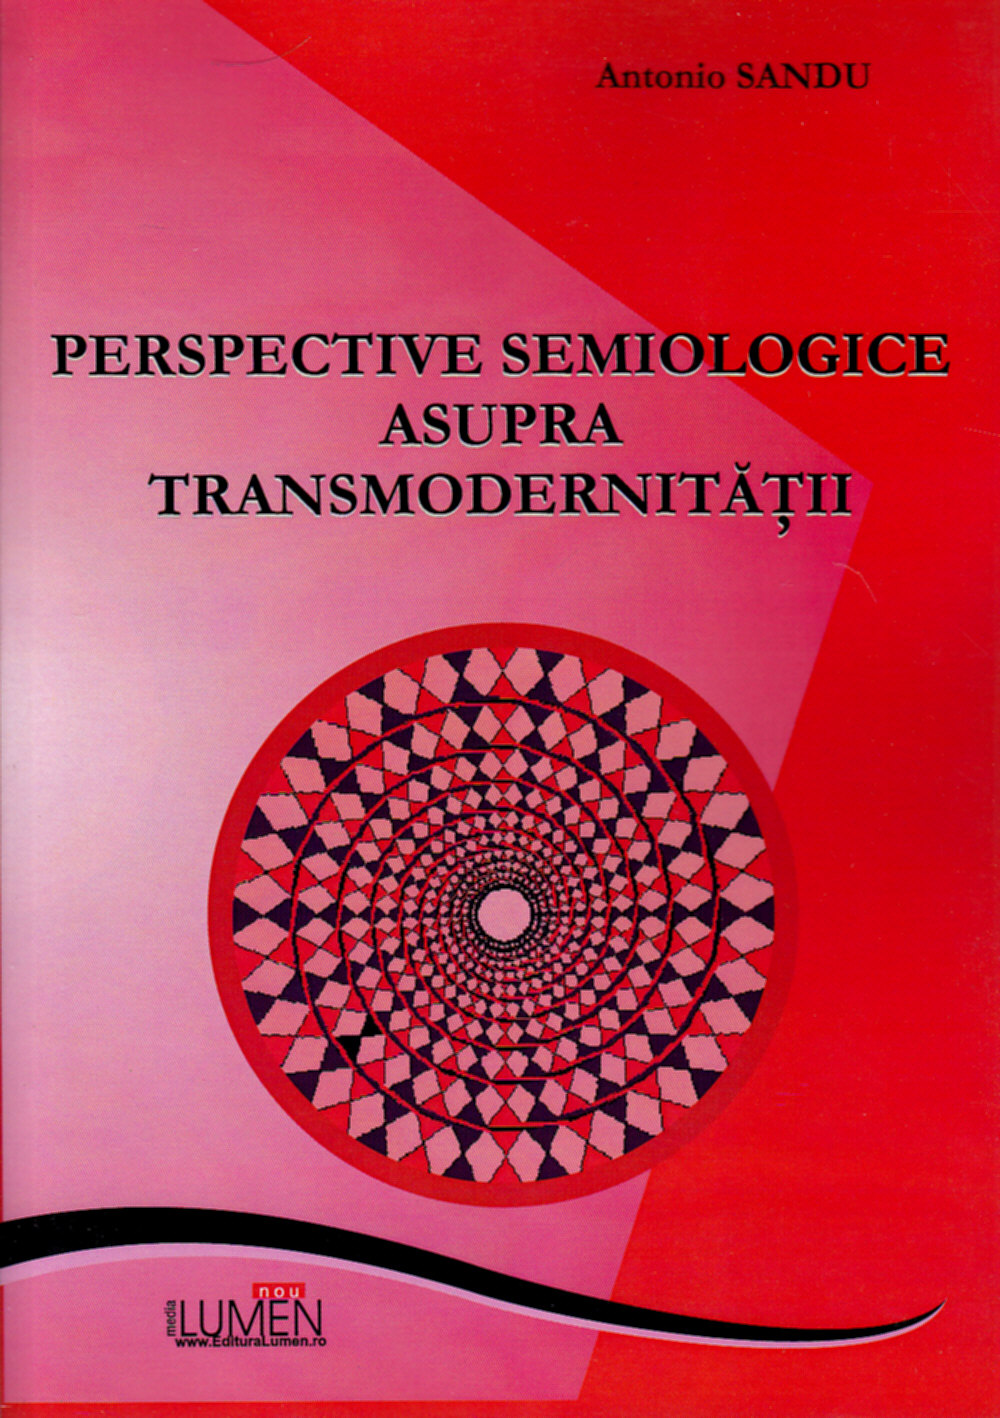 Perspective semiologice asupra transmodernitatii - Antonio Sandu